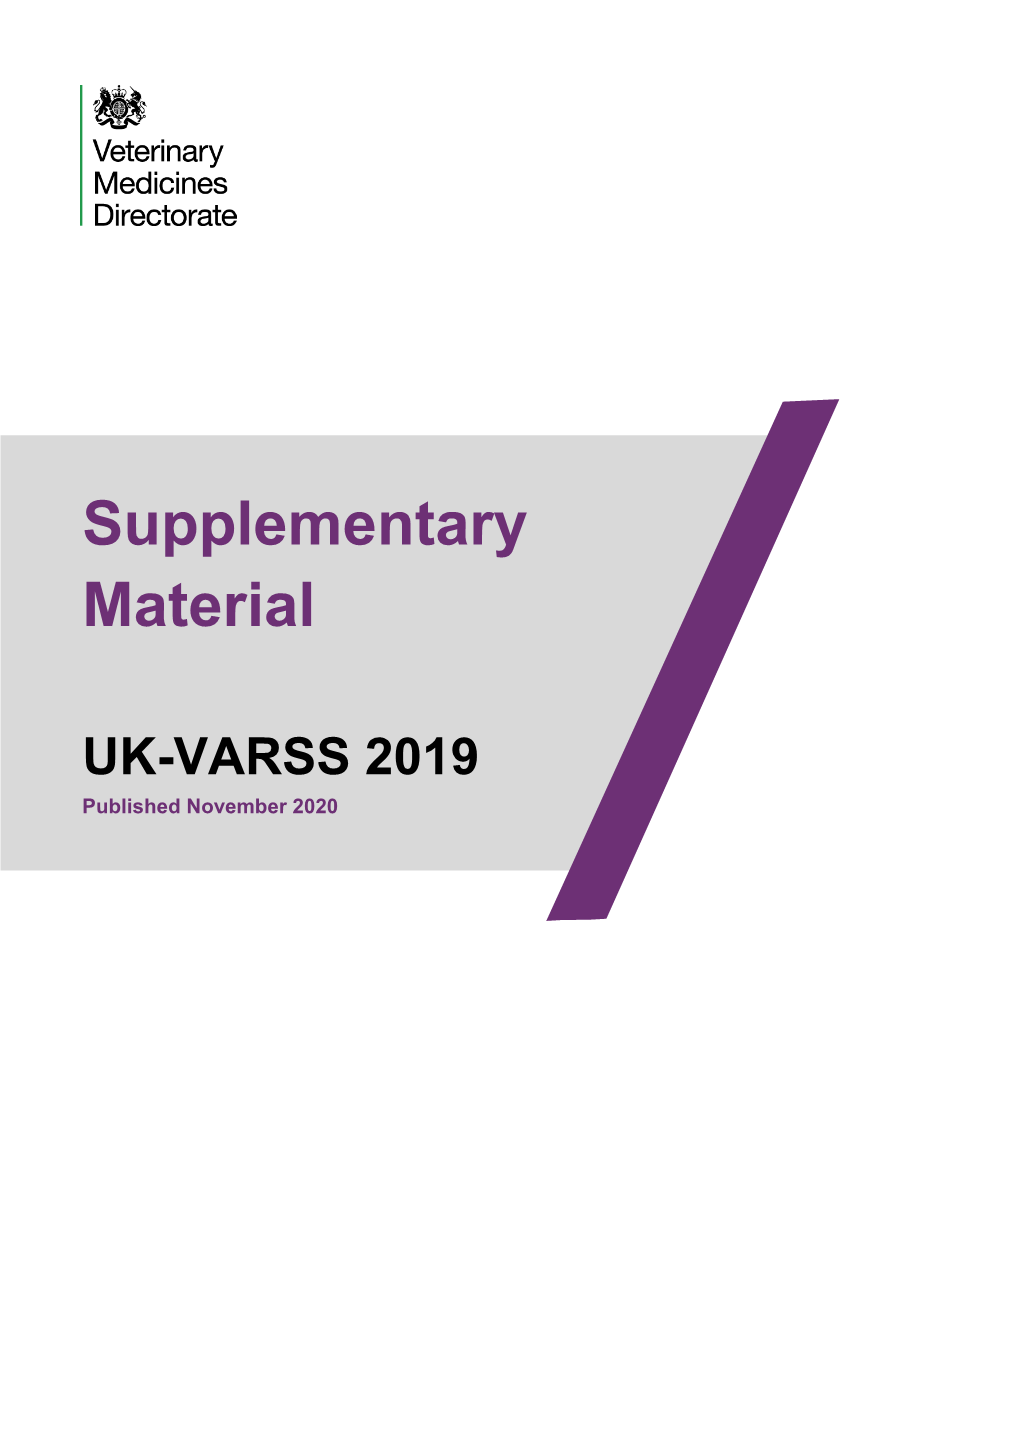 Supplementary Material UK-VARSS 2019